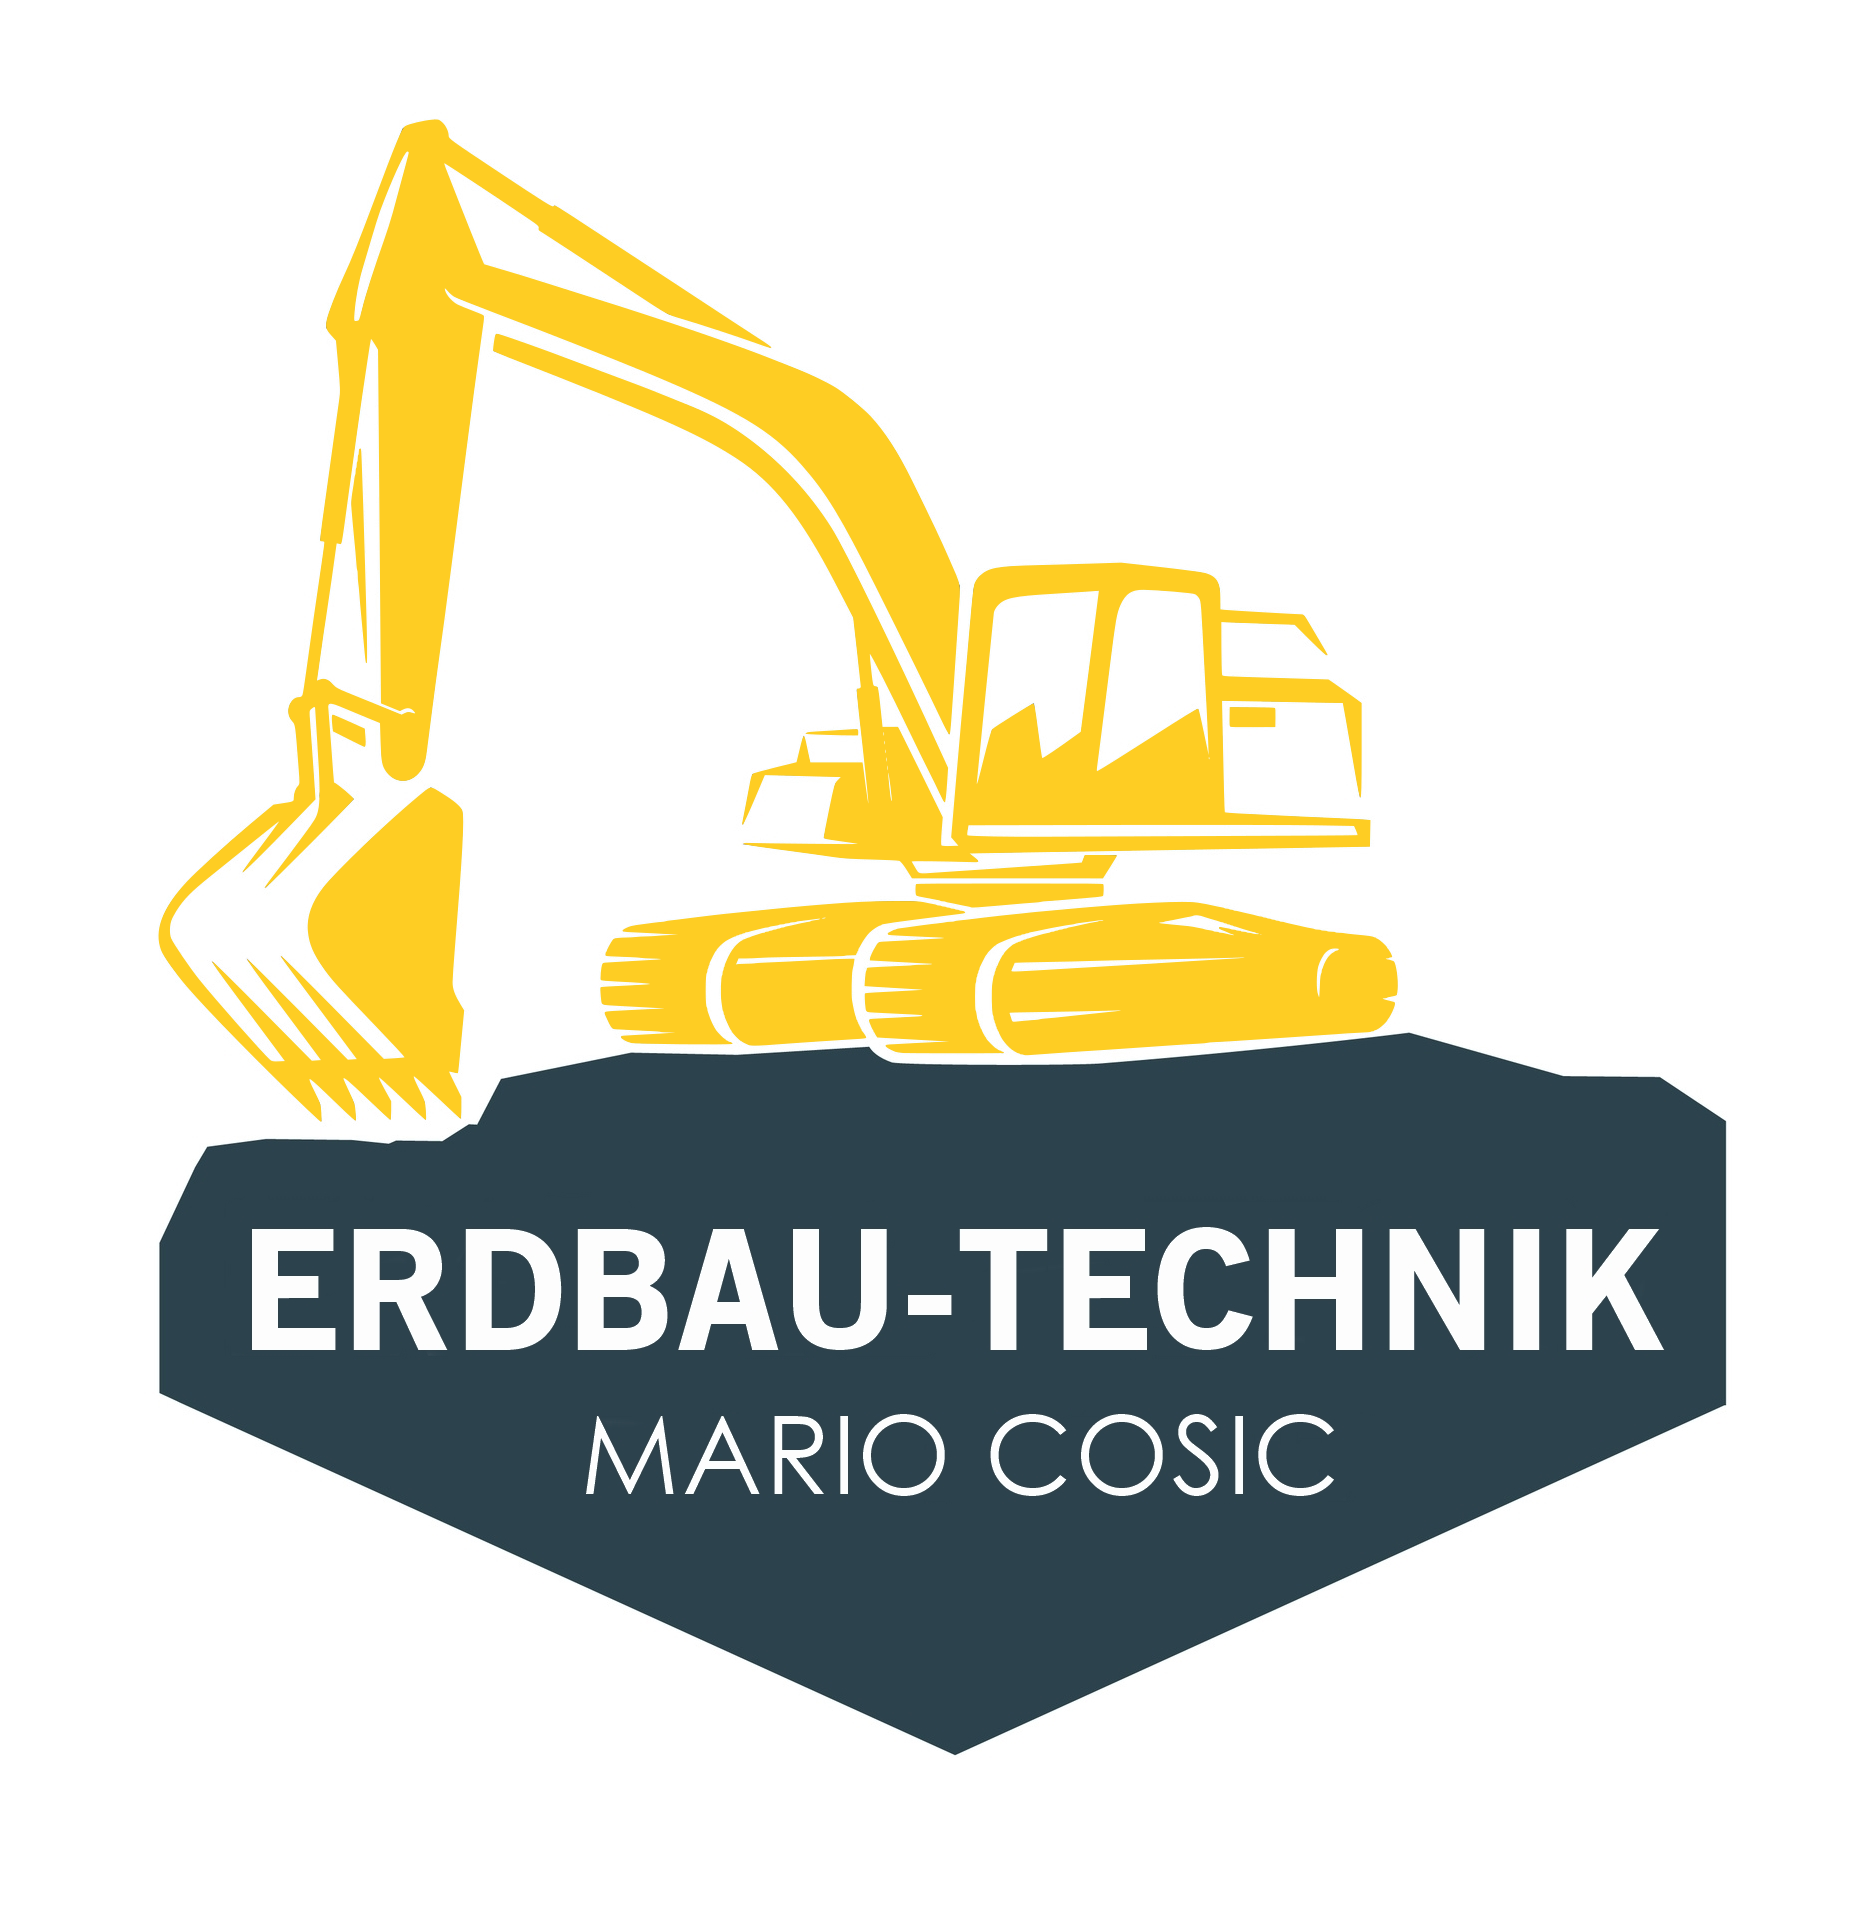 Mario Cosic Erdbau-Technik GmbH